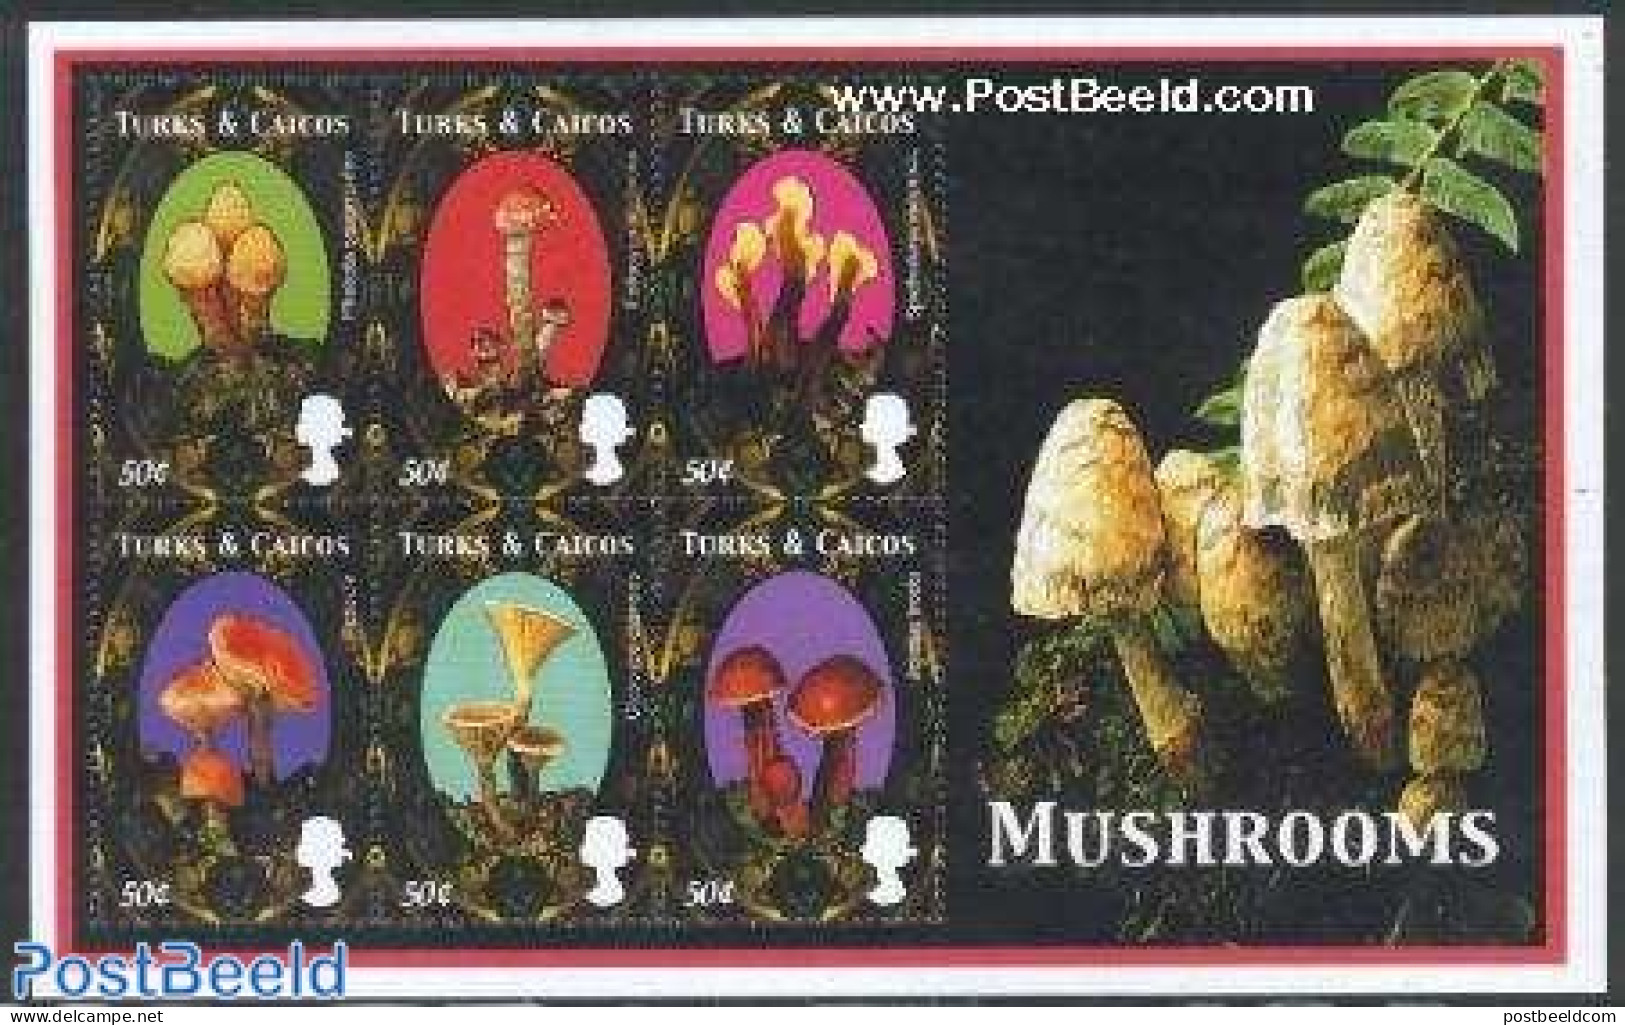 Turks And Caicos Islands 2000 Mushrooms 6v M/s, Mint NH, Nature - Mushrooms - Pilze